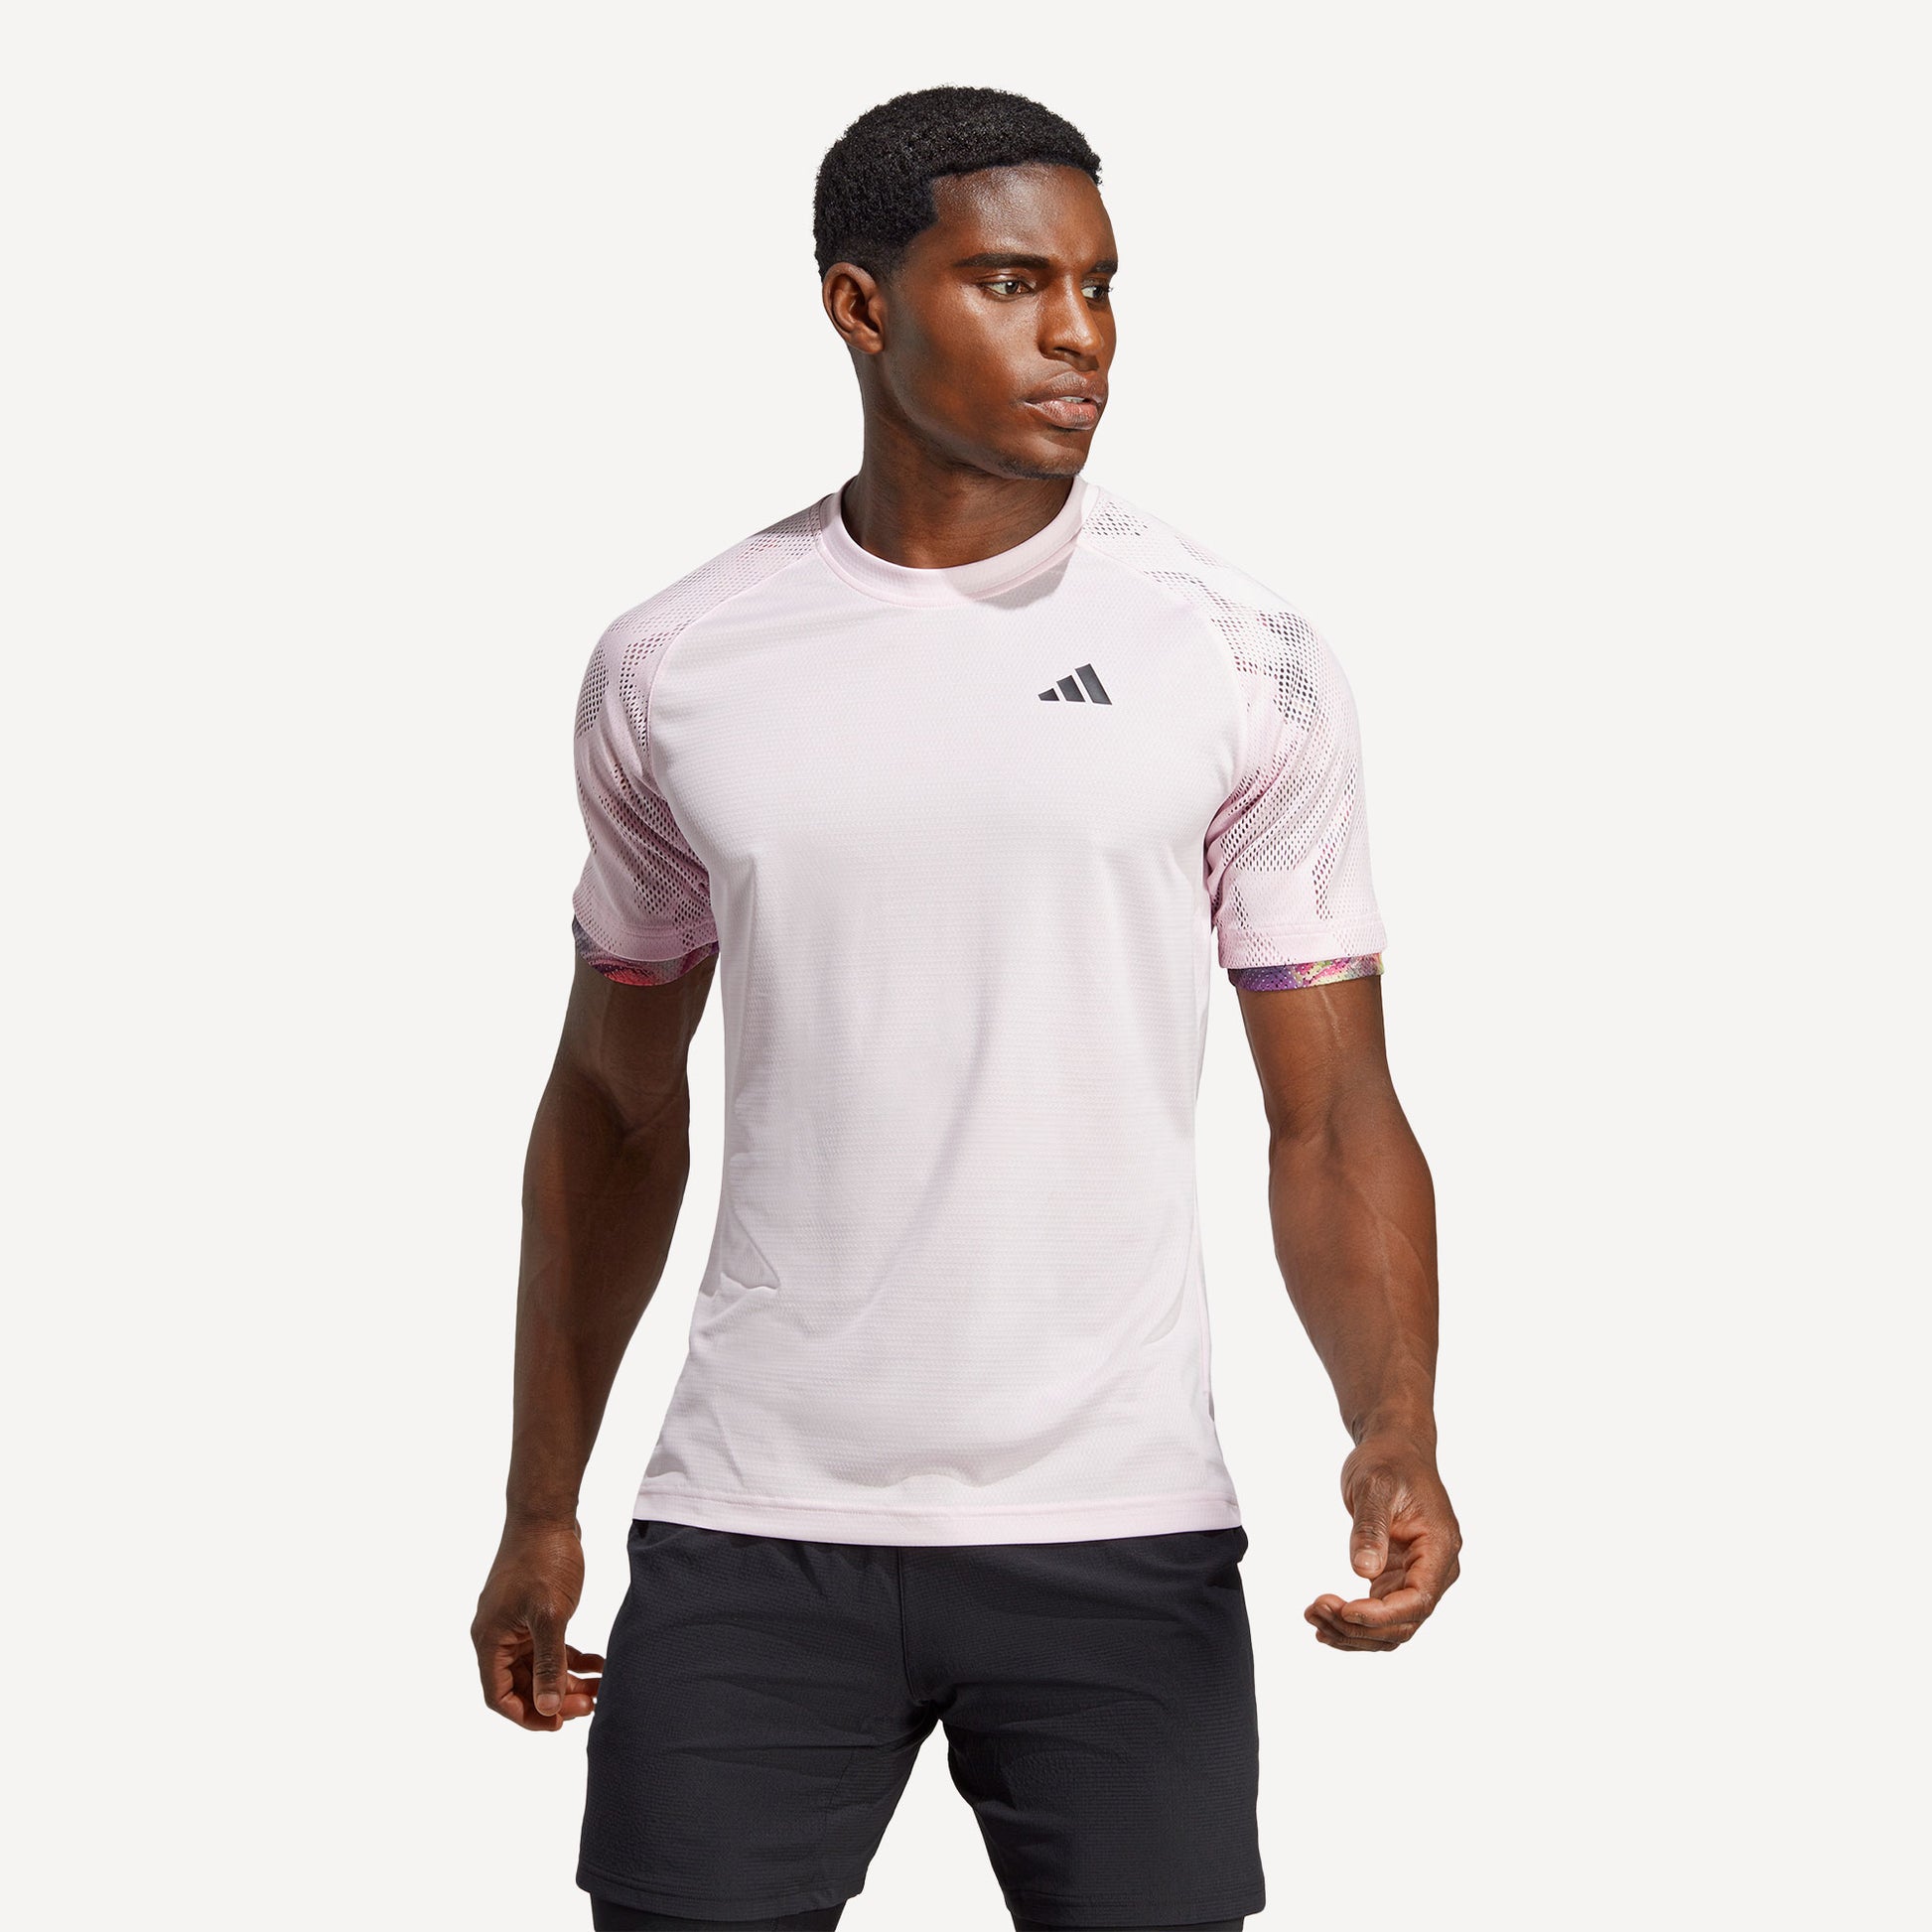 adidas Melbourne Ergo Heat Ready Men's Tennis Shirt Pink (1)